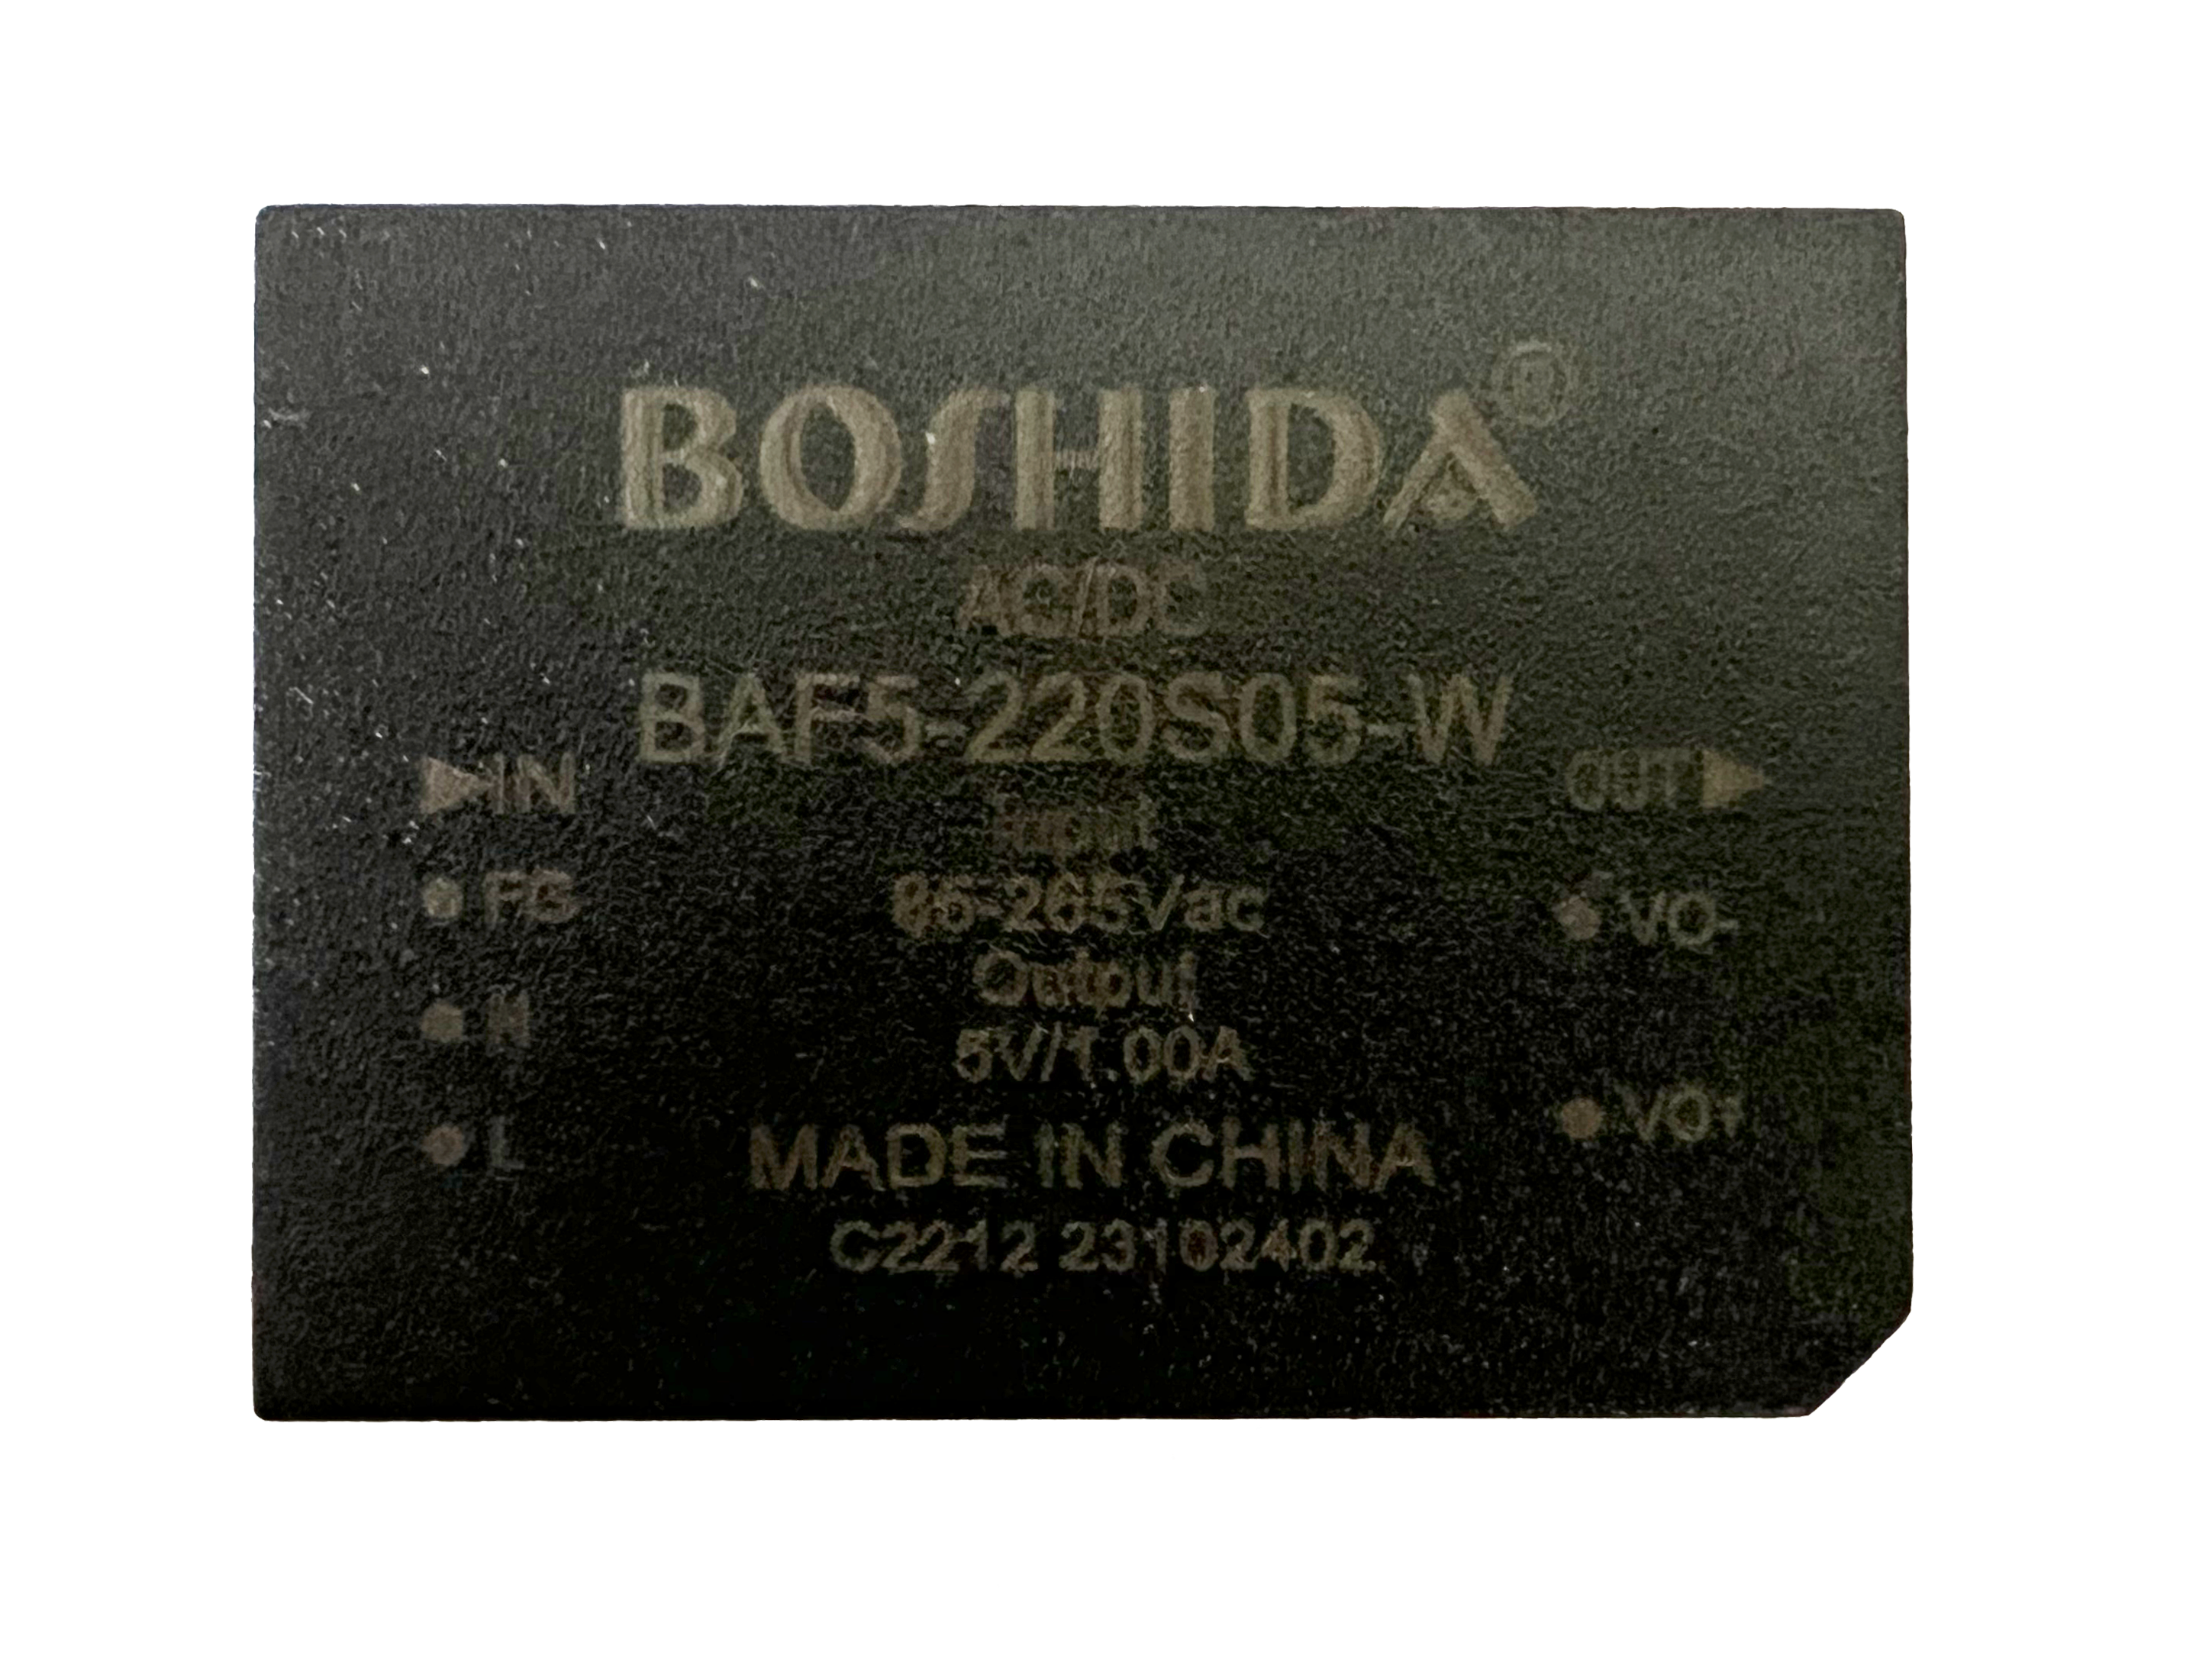 BOSHIDA 常见的DC电源模块故障及解决方法